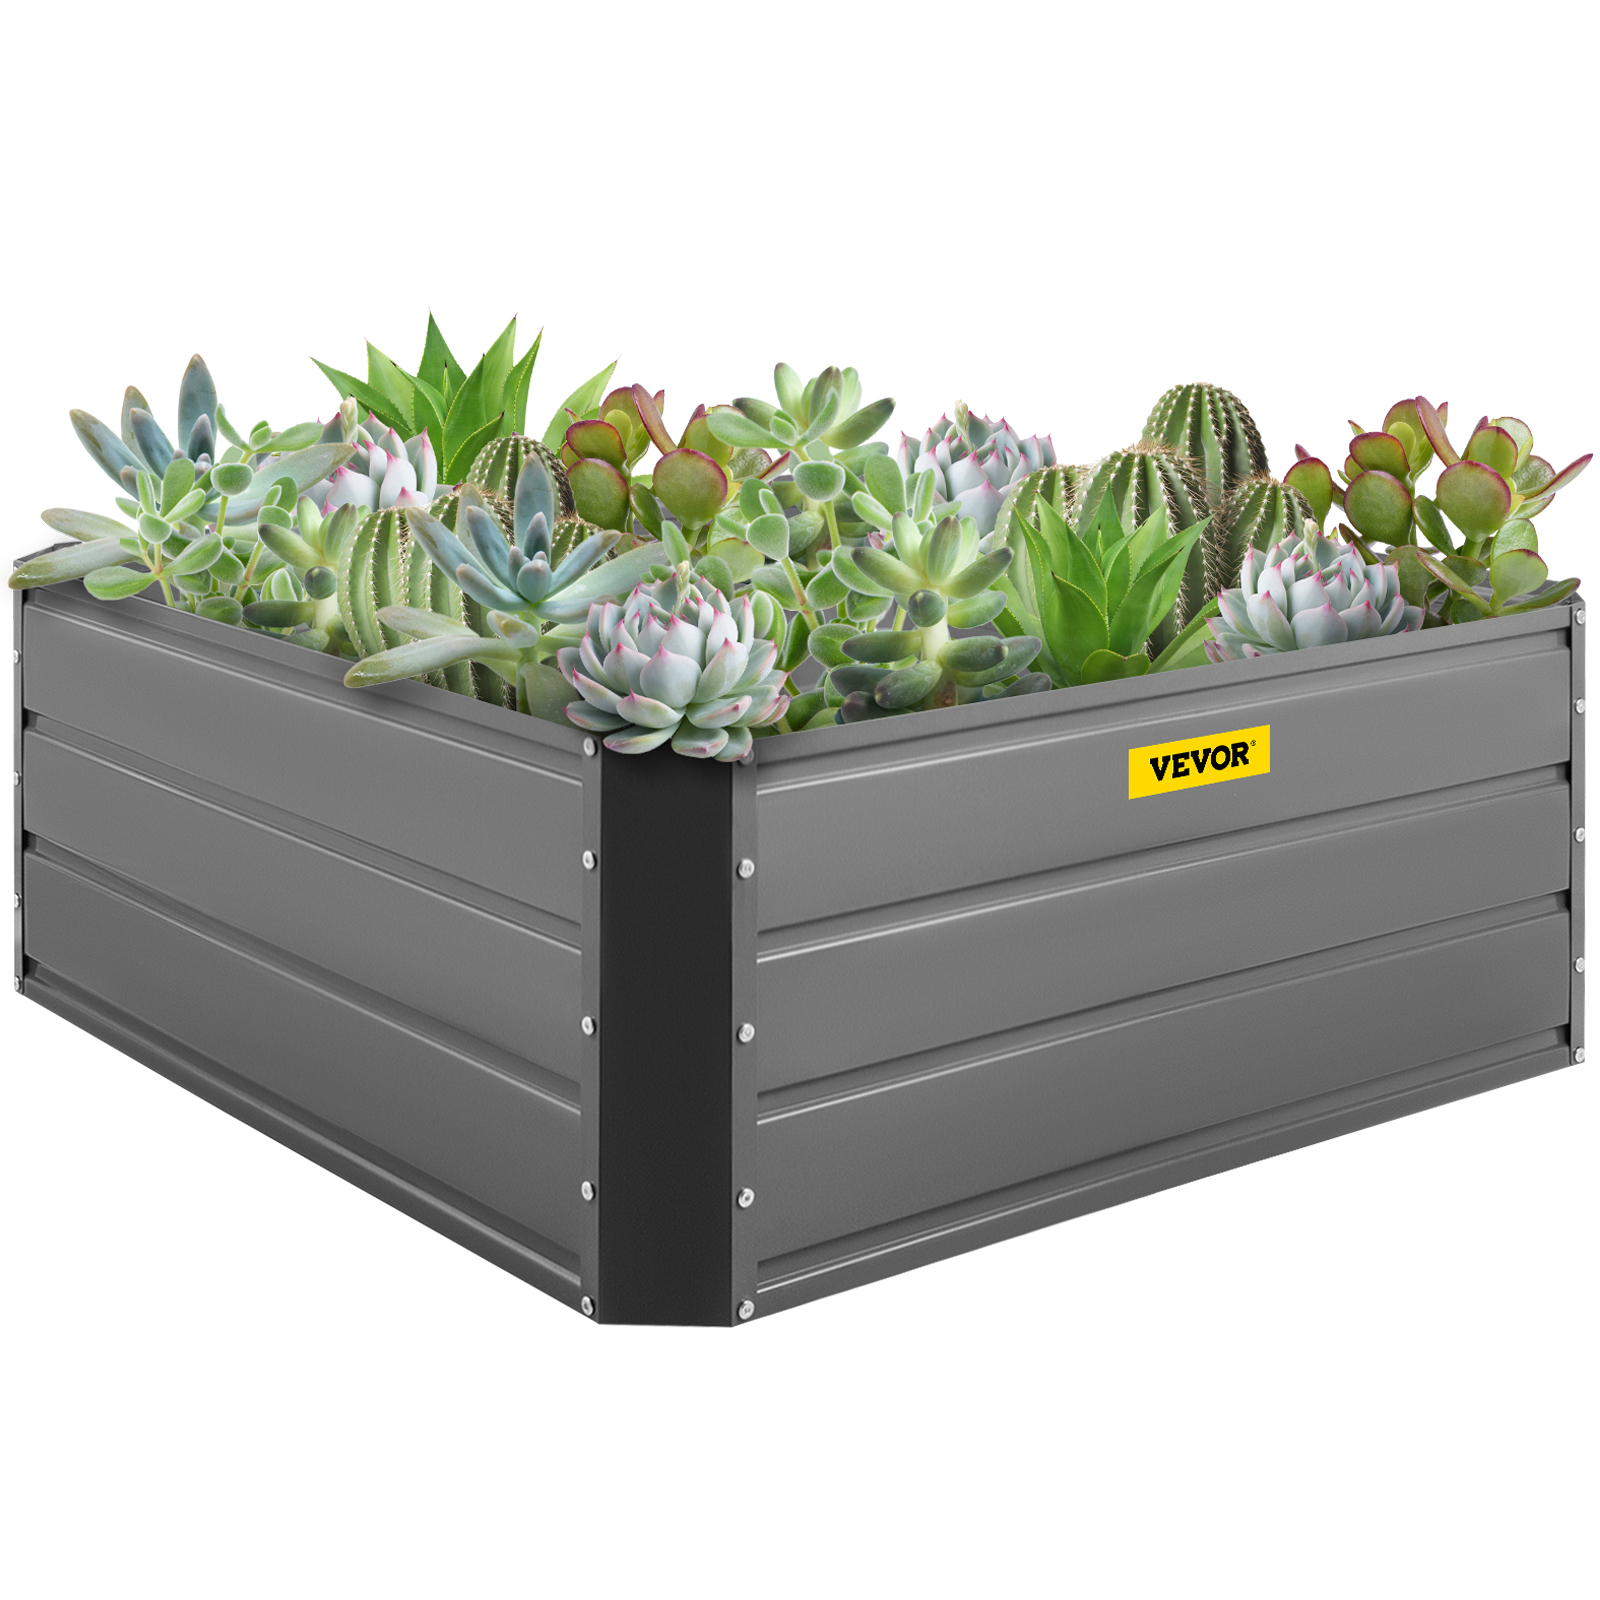 VEVOR Galvanized Raised Garden Bed Metal Planter Box Grow Vegetable Flower 39.6 от Vevor Many GEOs